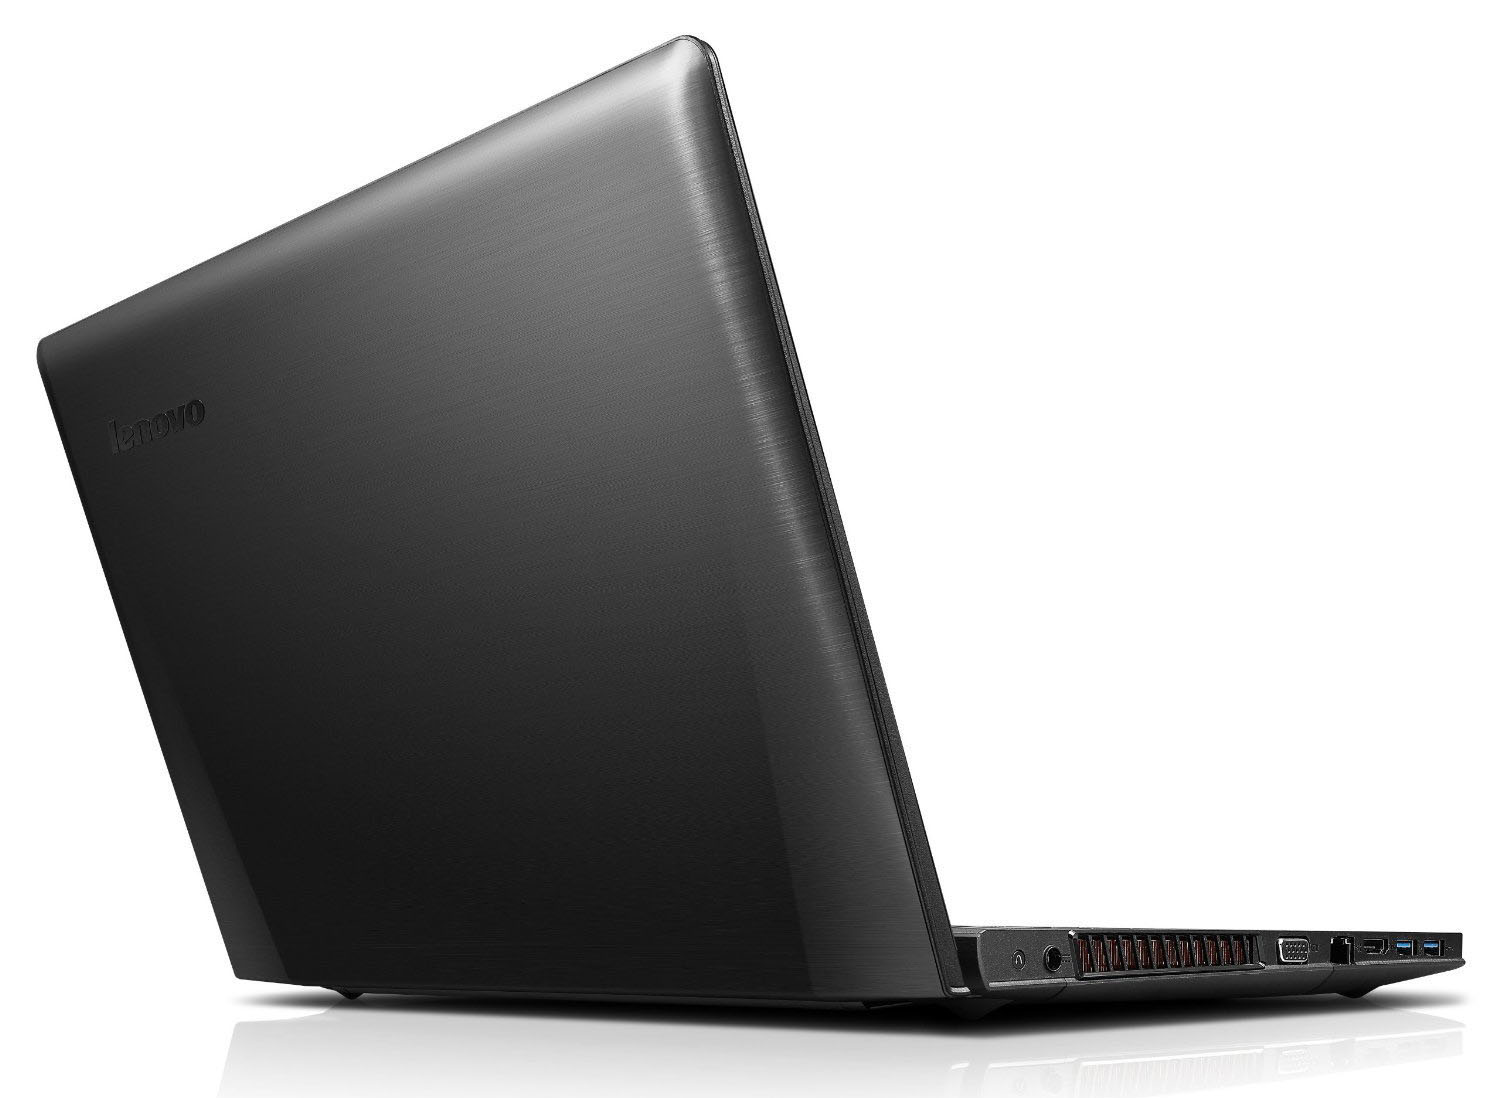 Lenovo IdeaPad Yp   Intel Core iMQ · NVIDIA GeForce GT